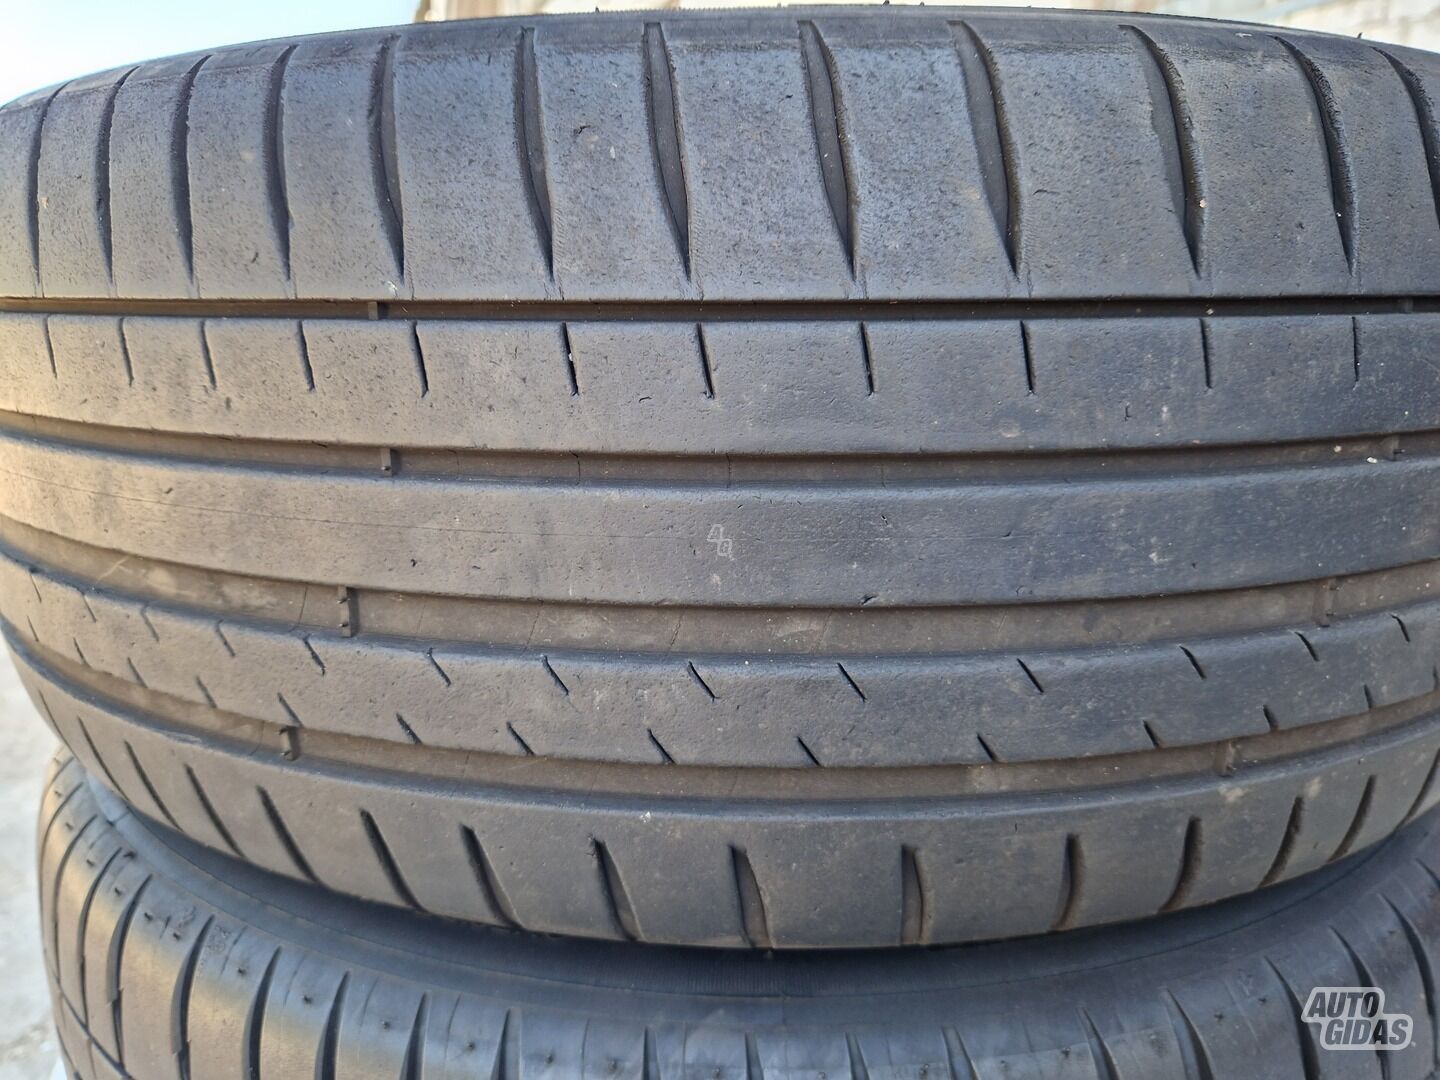 Michelin 5mm R18 summer tyres passanger car